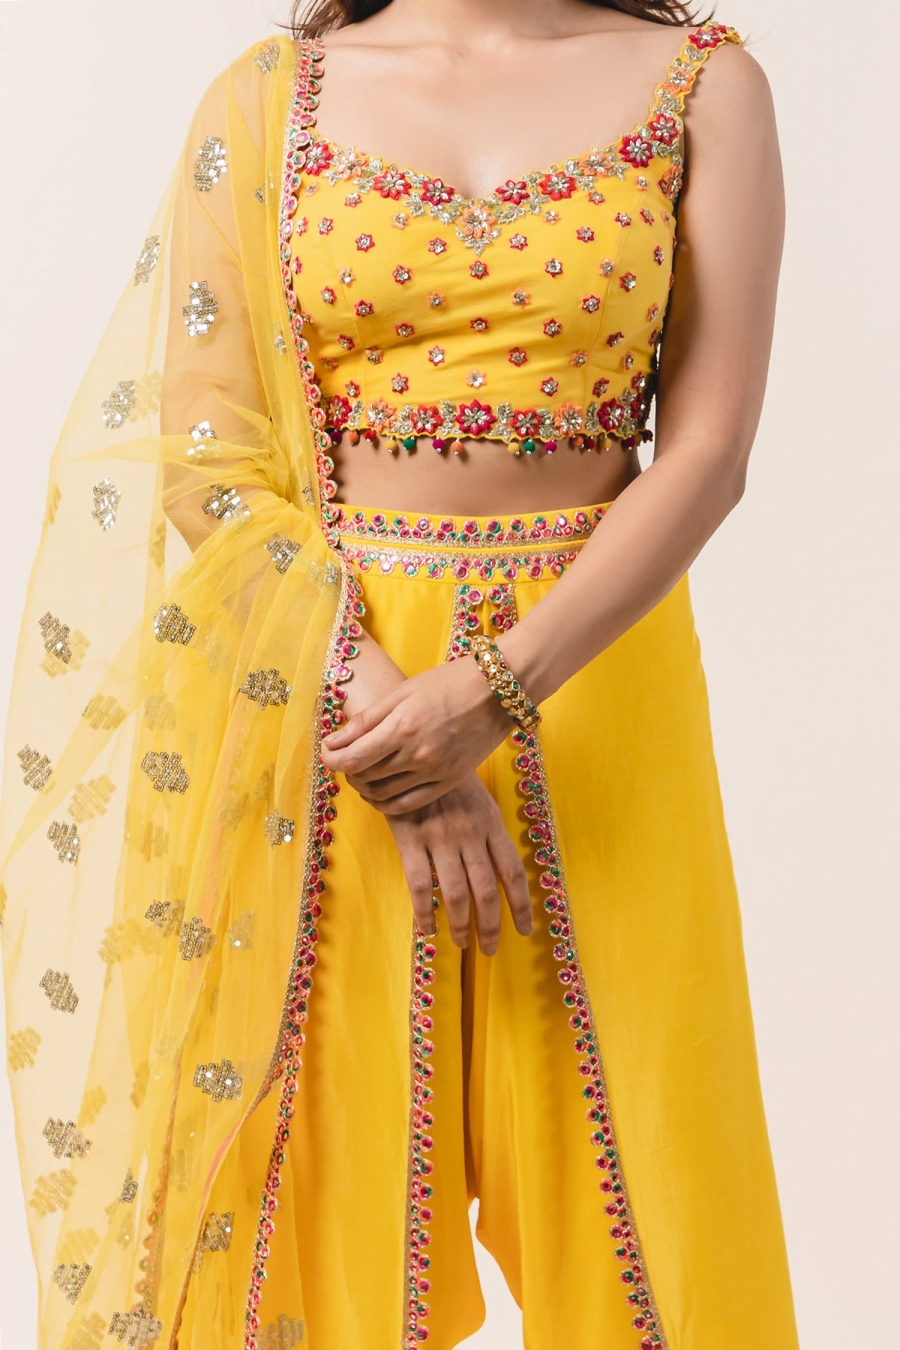 Garba Beige Kedia with yellow dhoti Pants Chaniya choli Navratri Dandia  S-XL | eBay